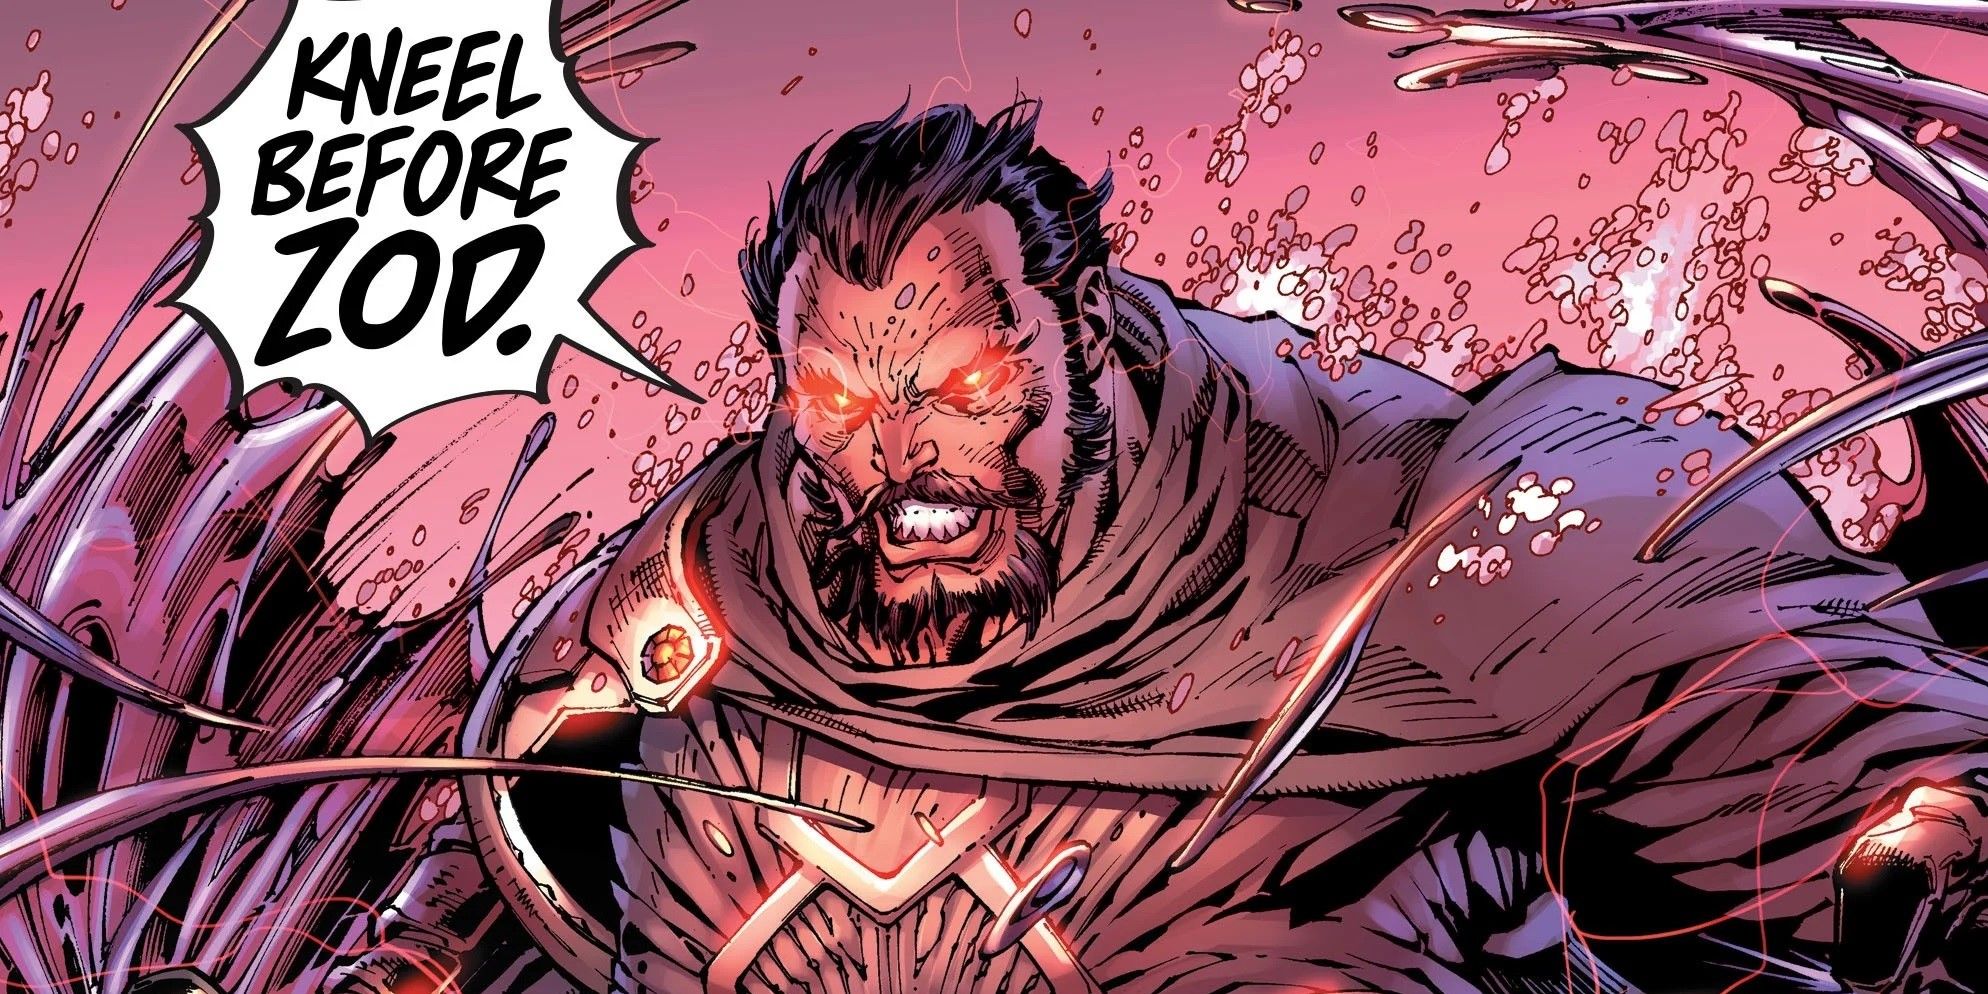 Zod Commands His Enemies To Kneel Before Him